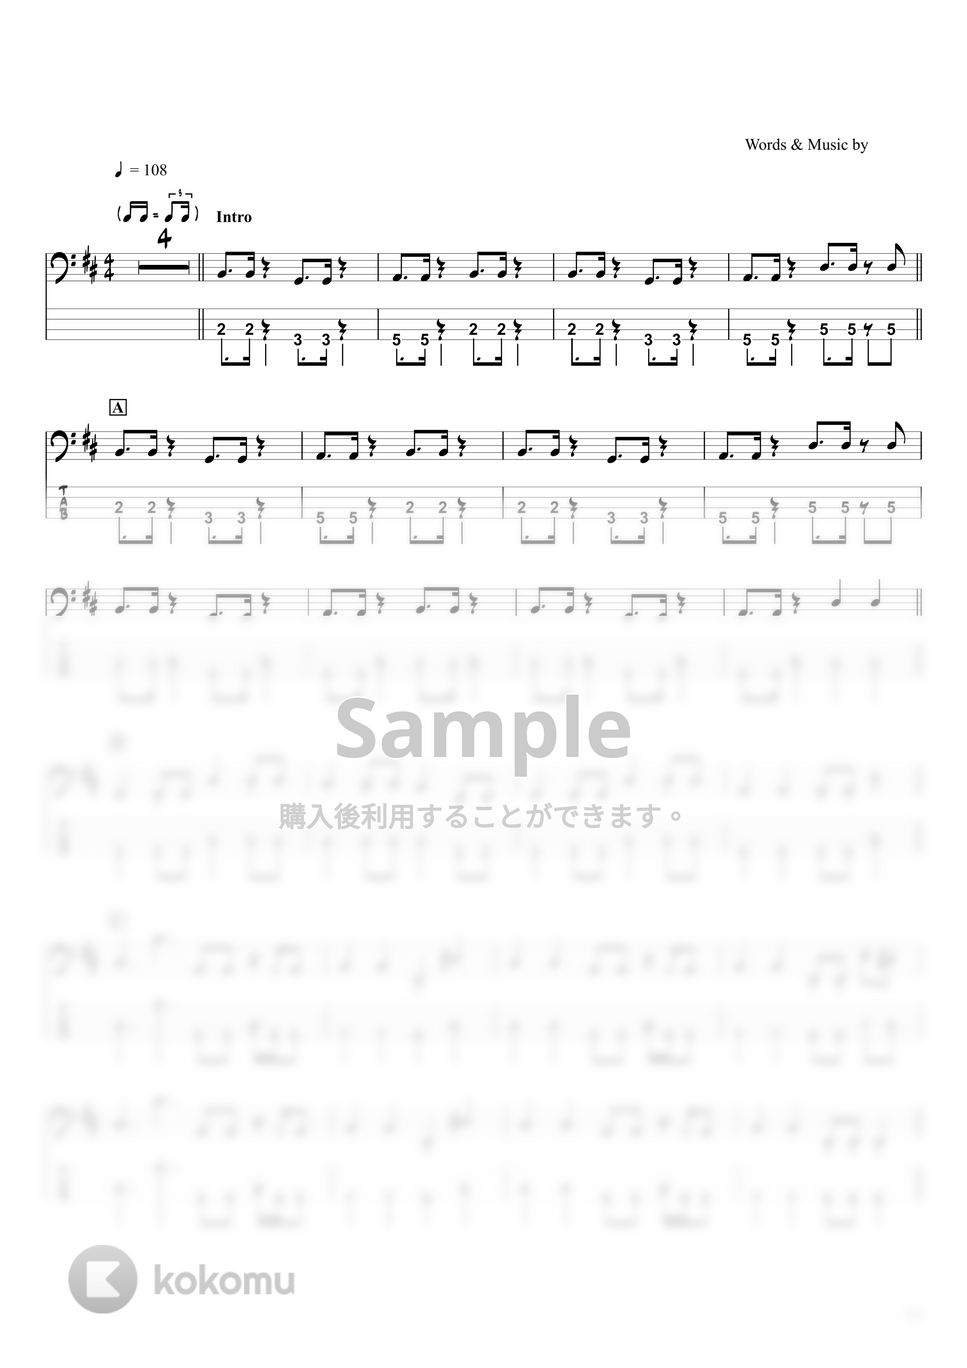 MAISONdes feat. 和ぬか,ami - ヨワネハキ (ベースTAB譜☆4弦ベース対応) by swbass